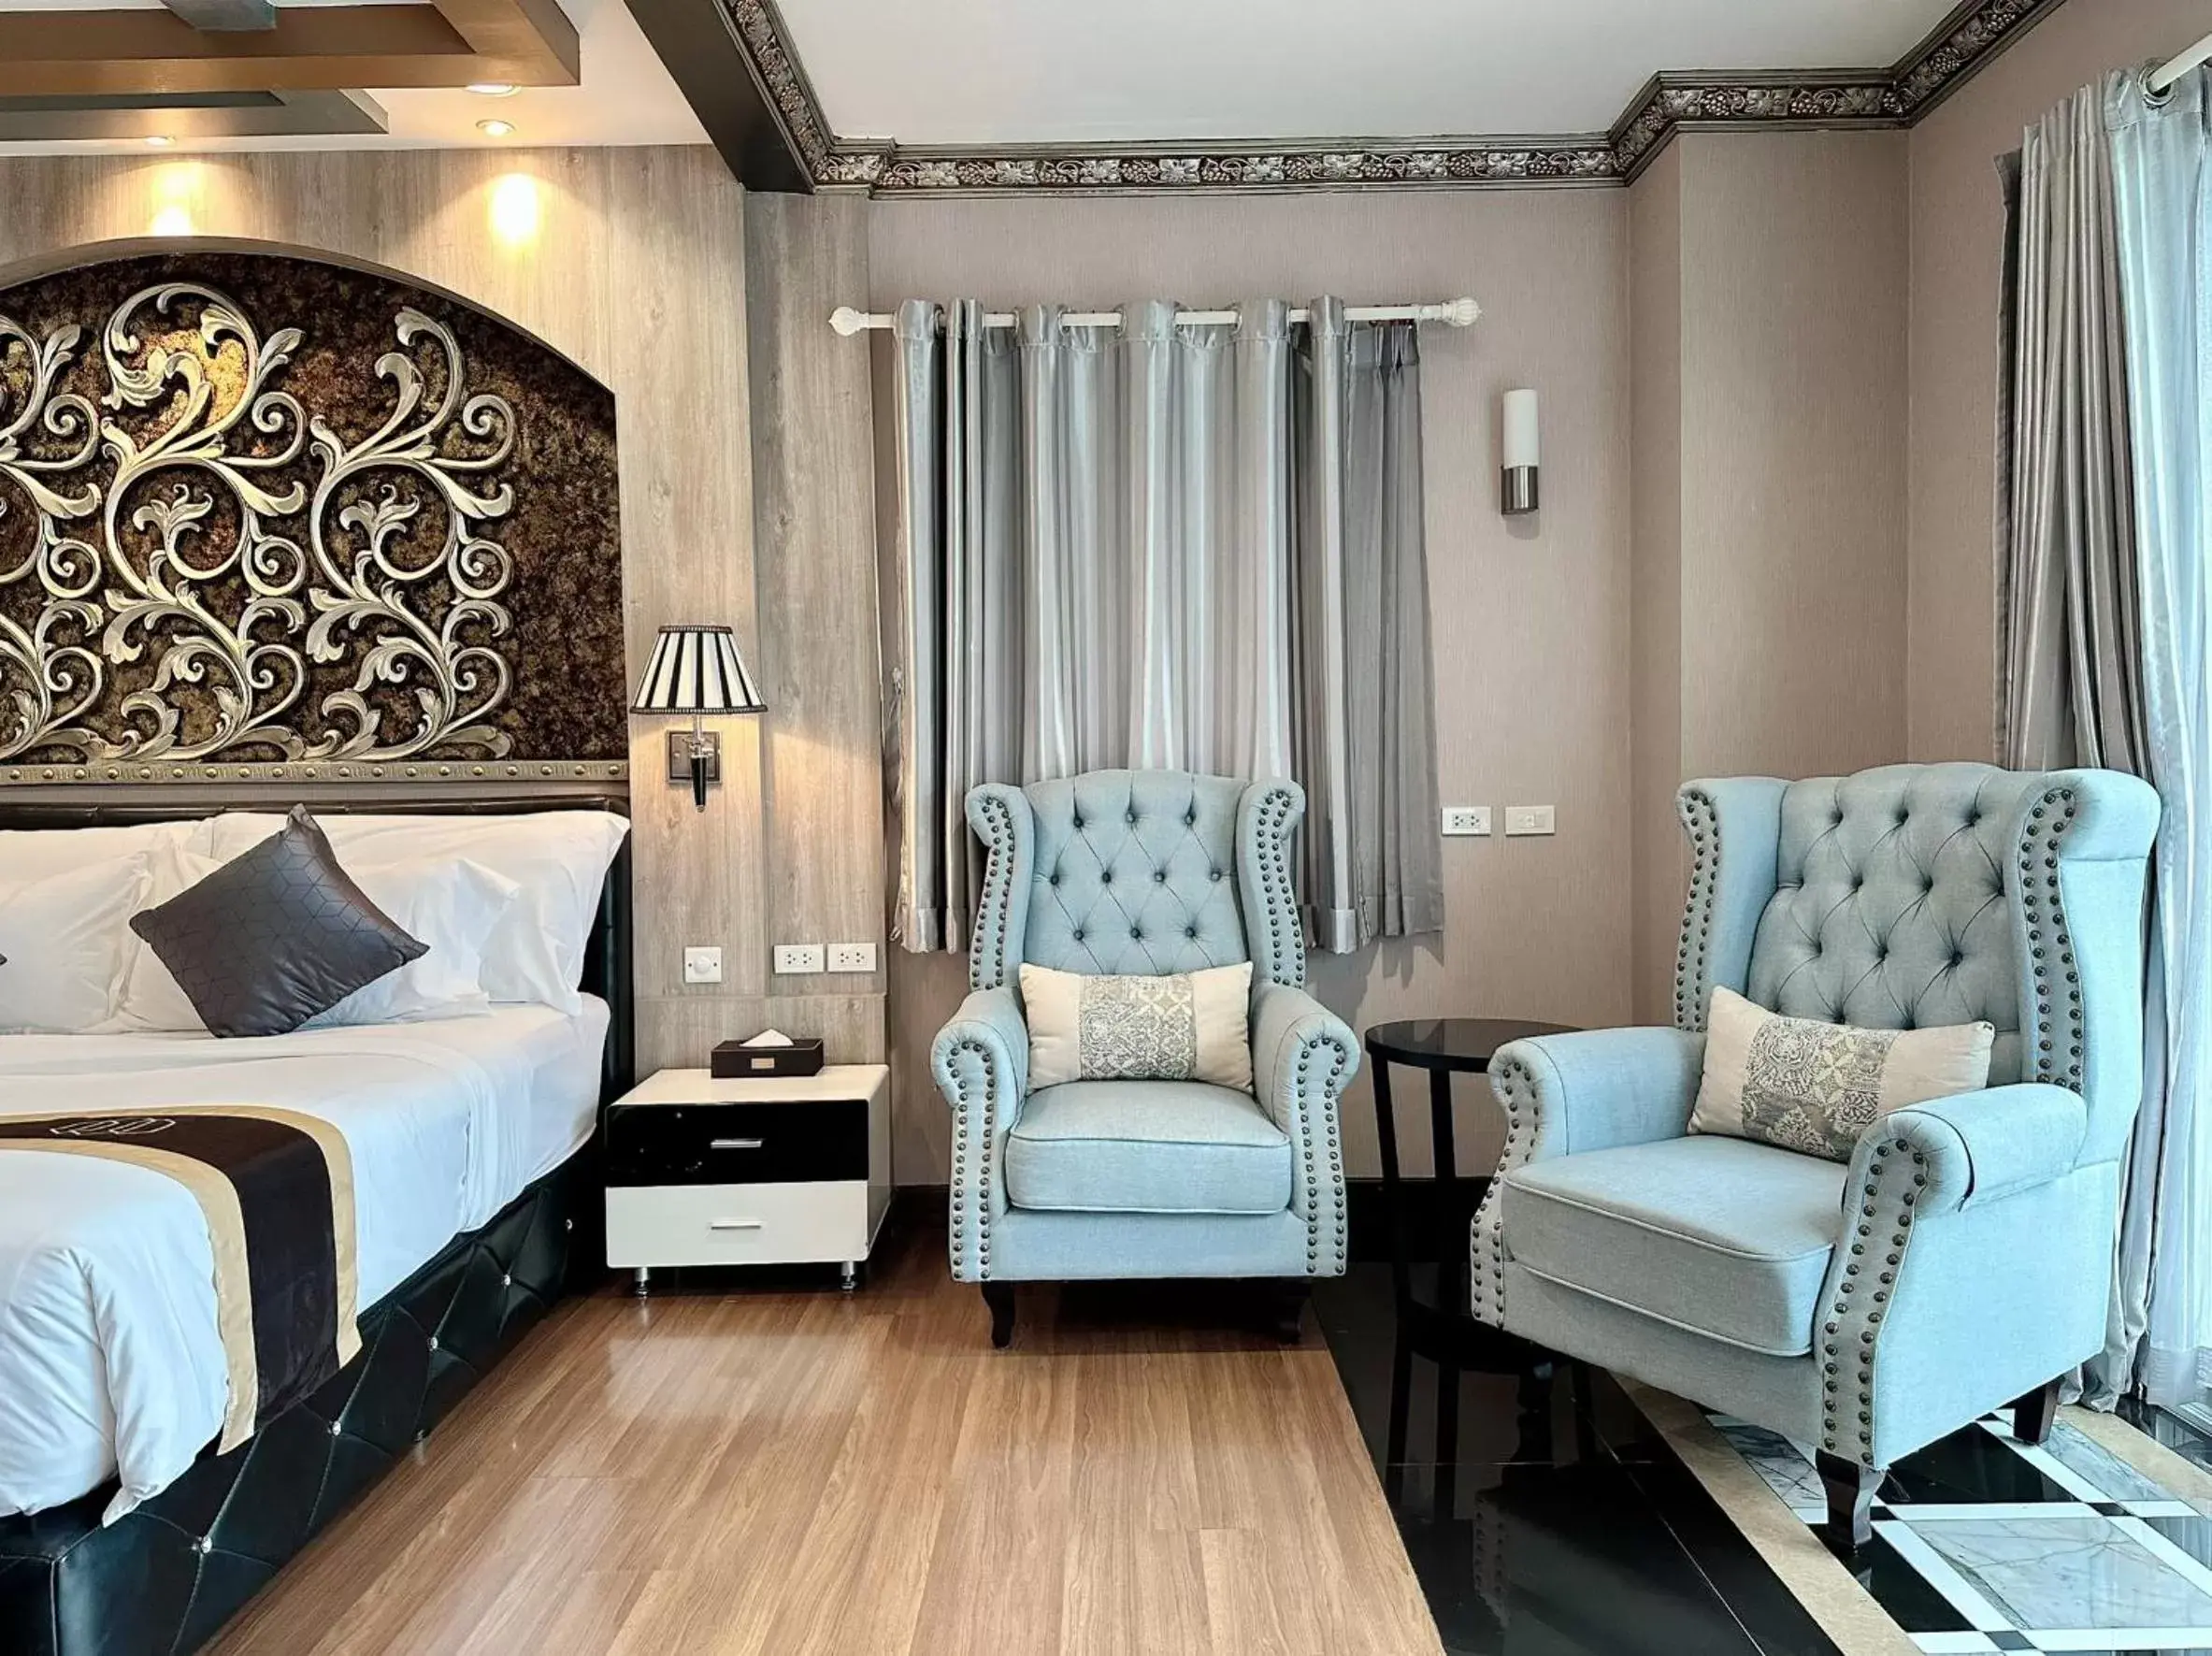 Bed in KTK Pattaya Hotel & Residence